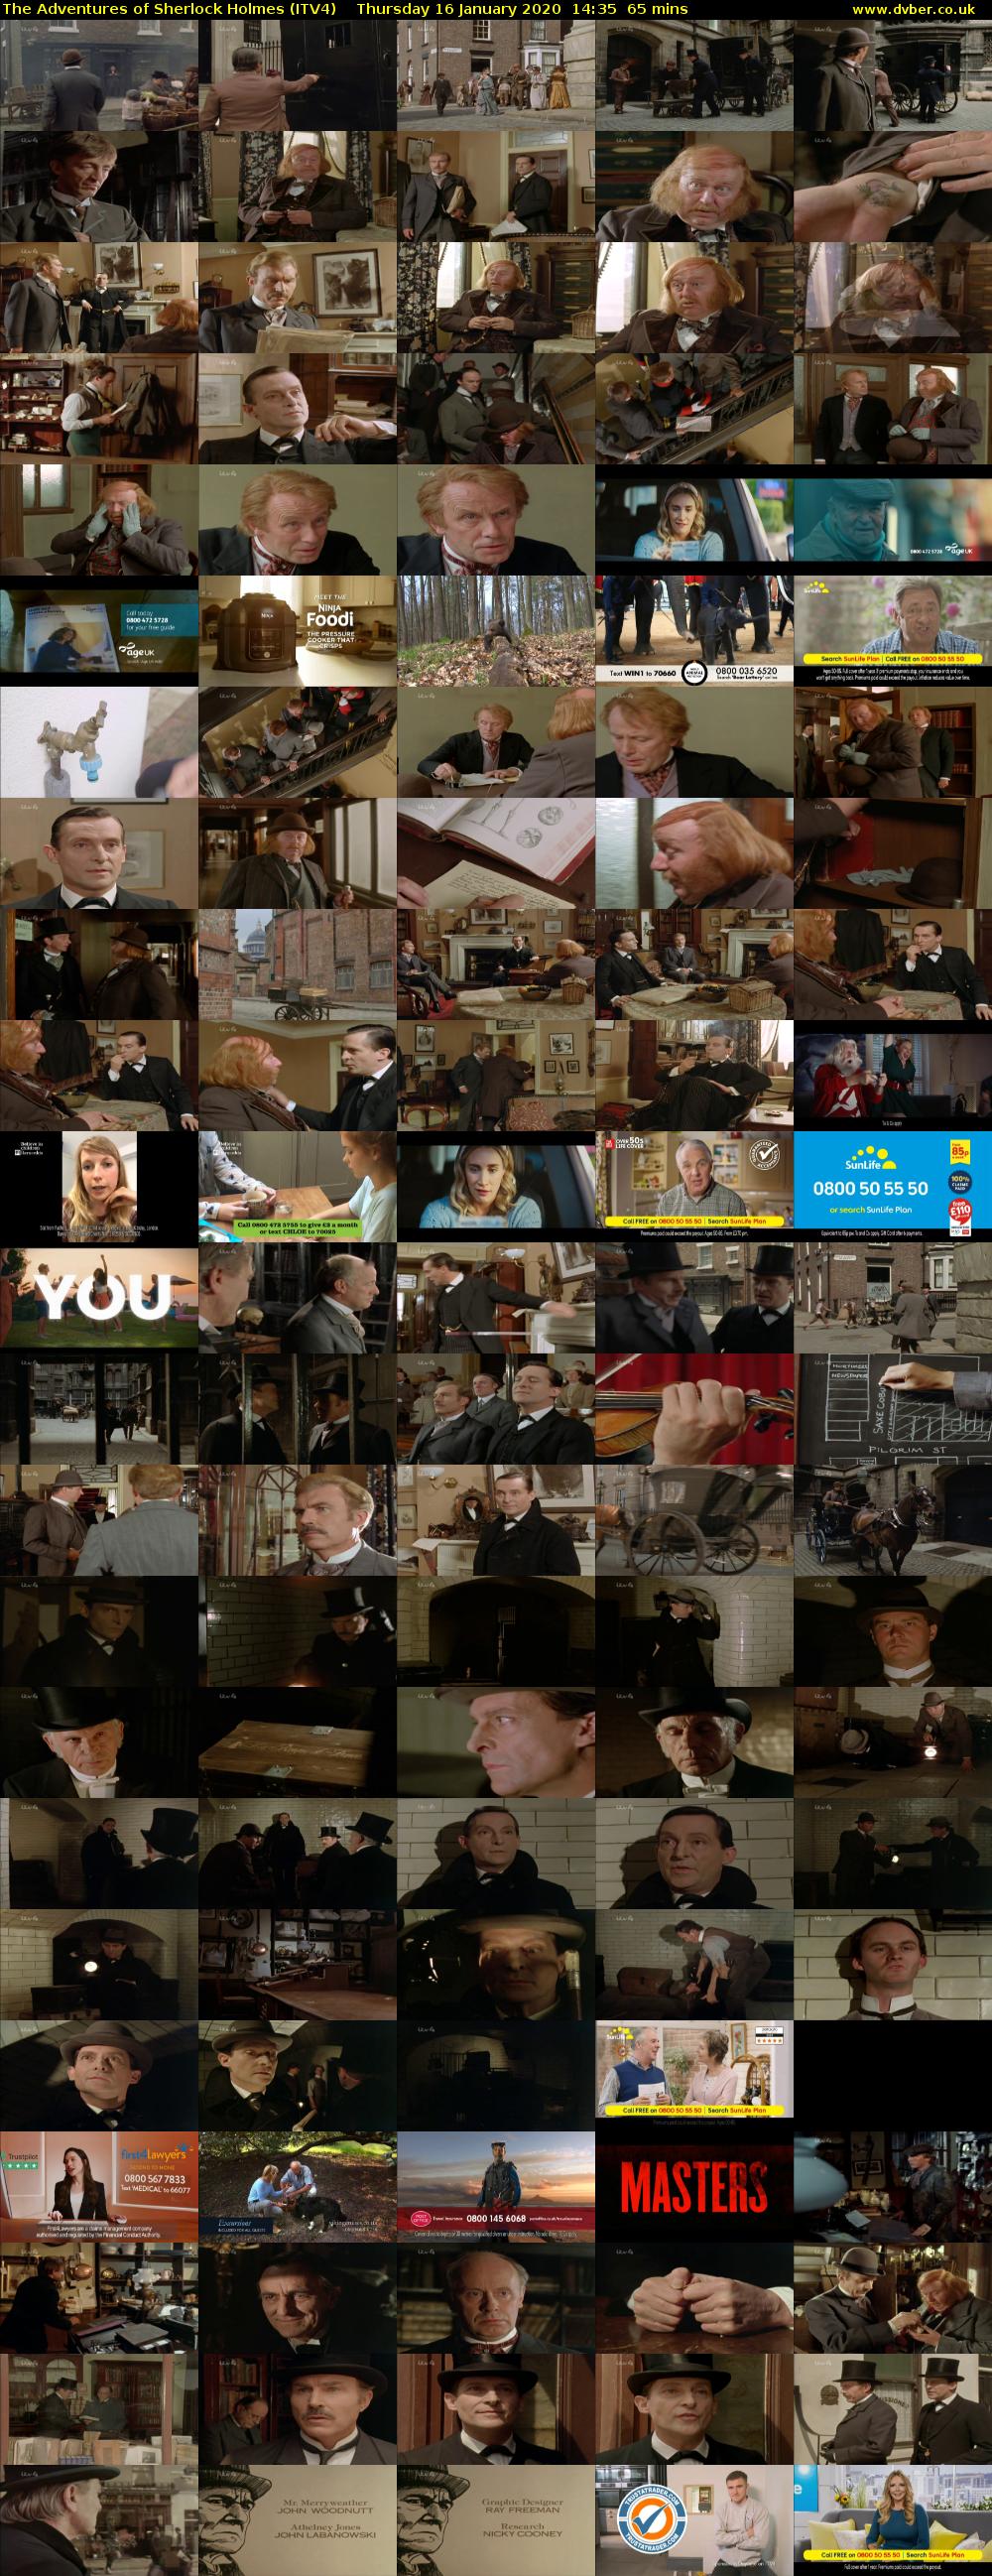 The Adventures of Sherlock Holmes (ITV4) Thursday 16 January 2020 14:35 - 15:40